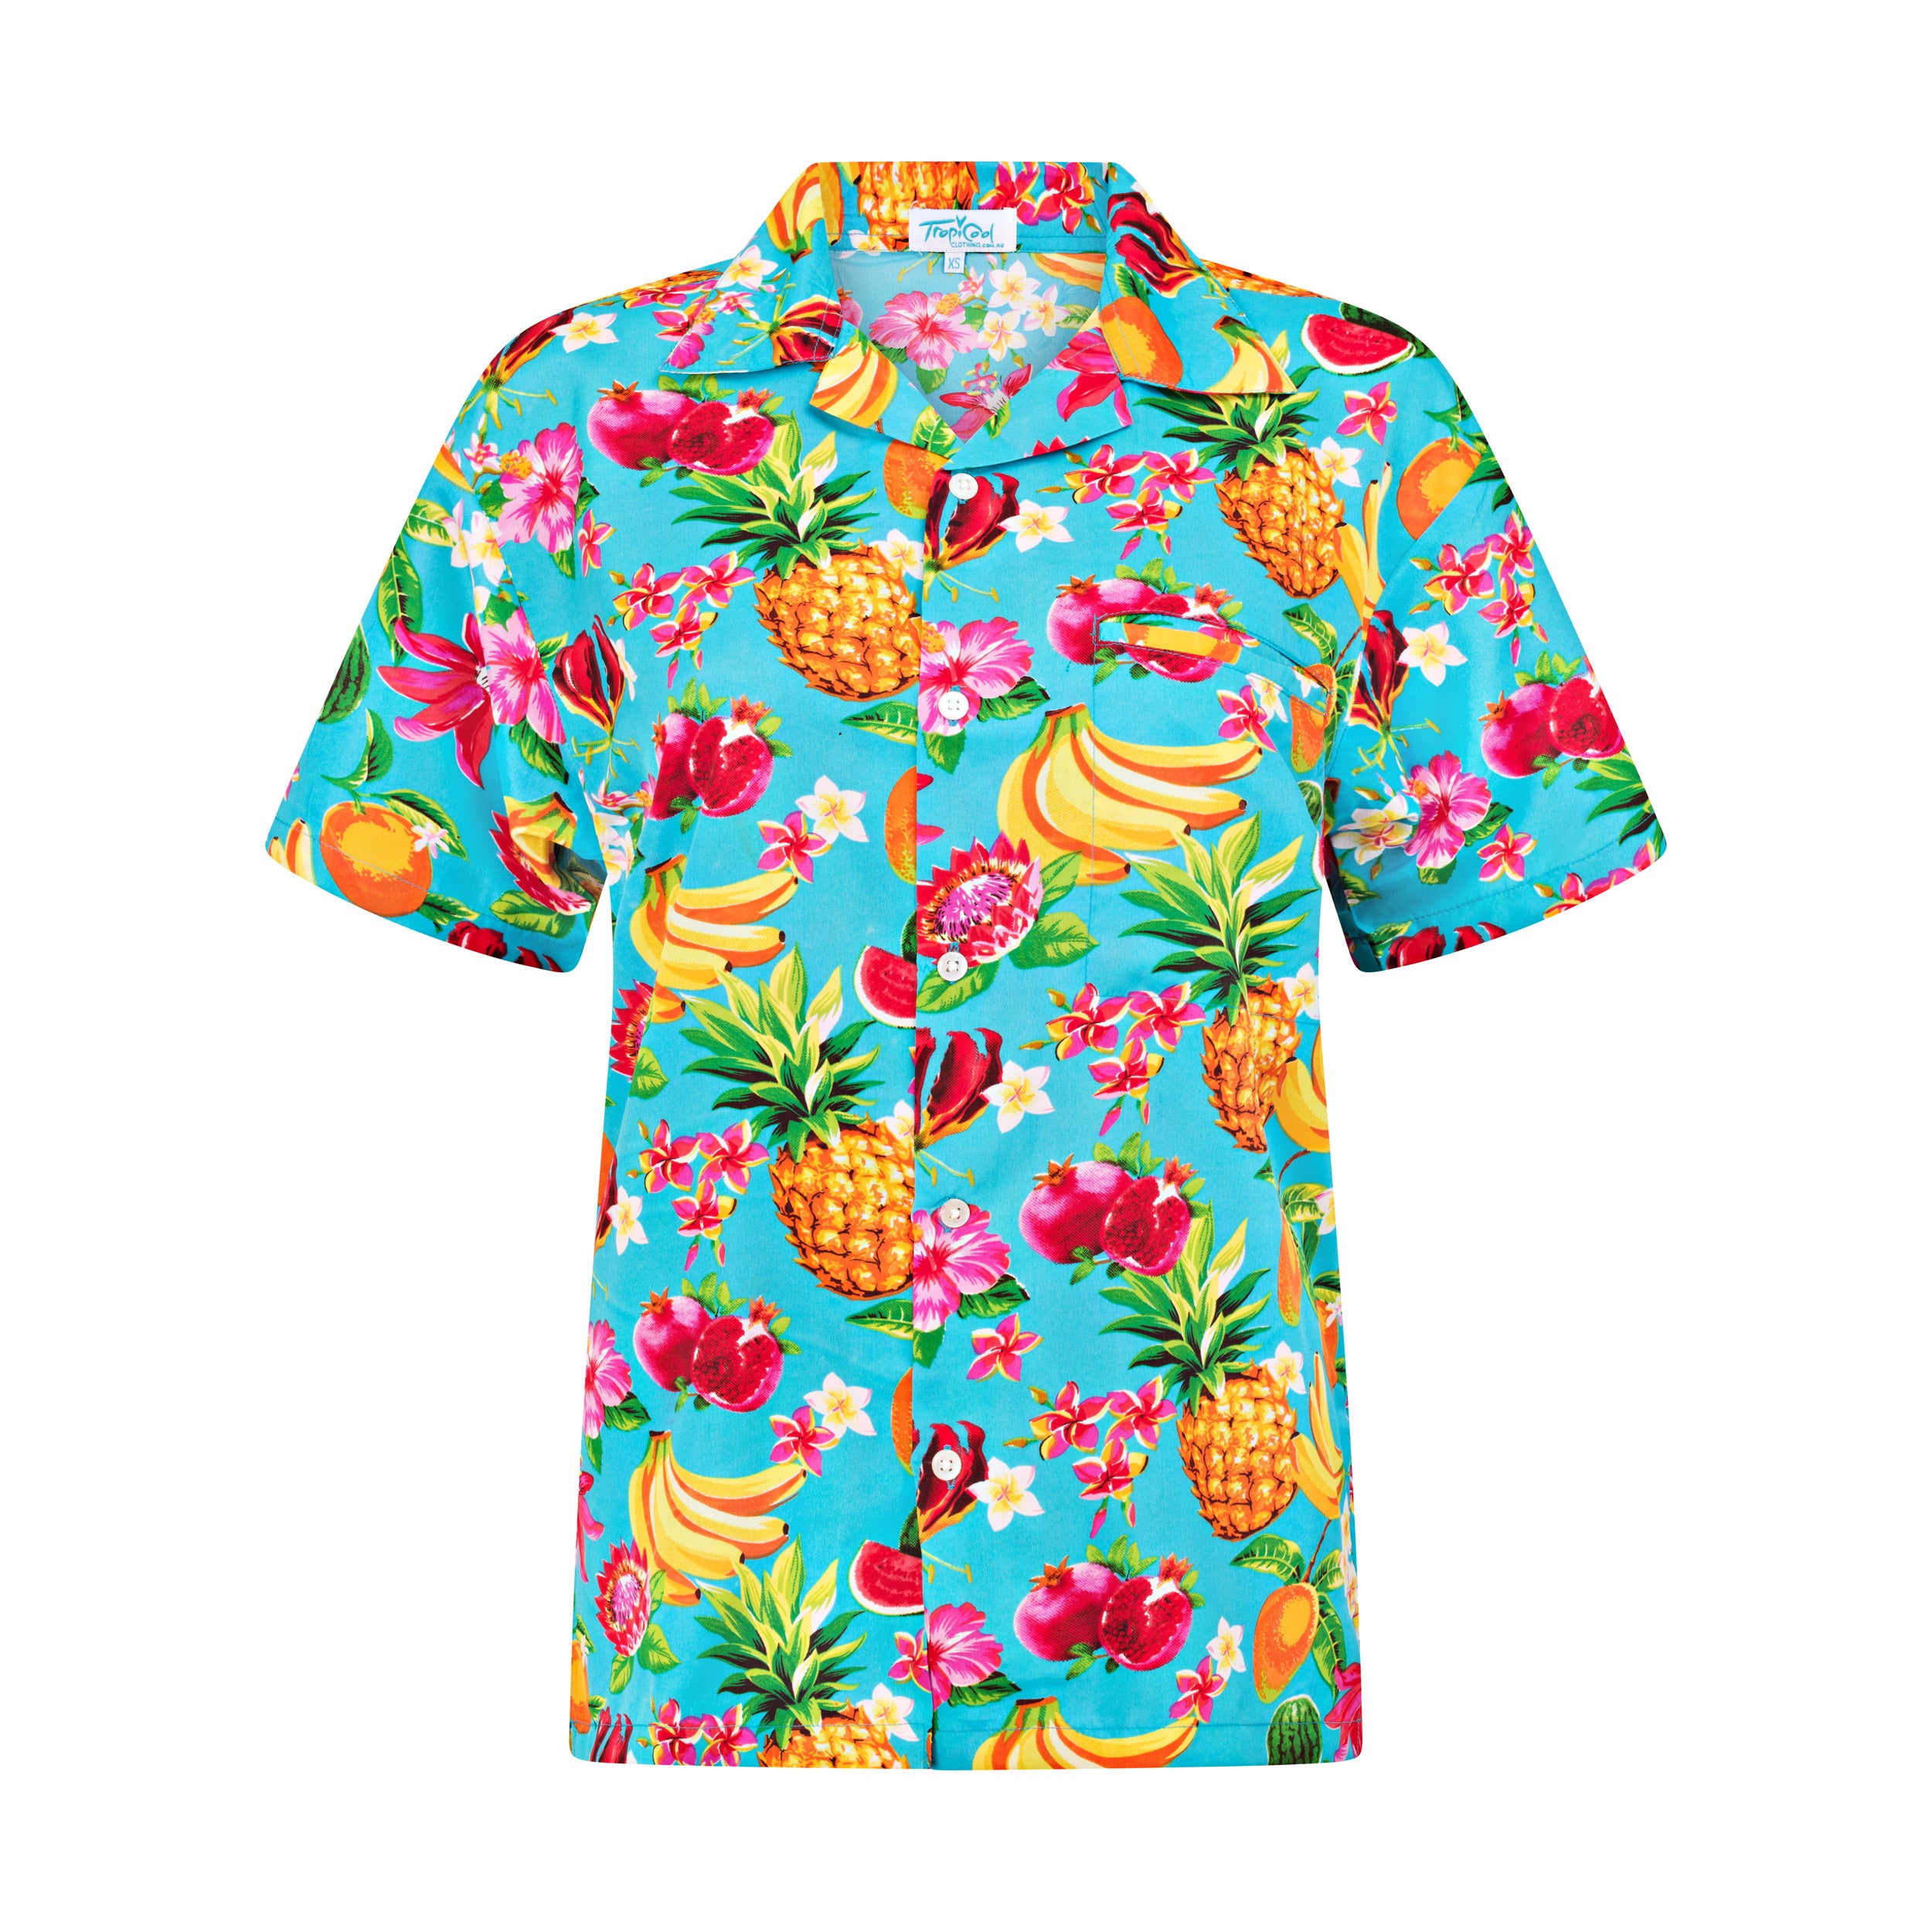 Tutti Frutti Tuquoise Adult Shirt